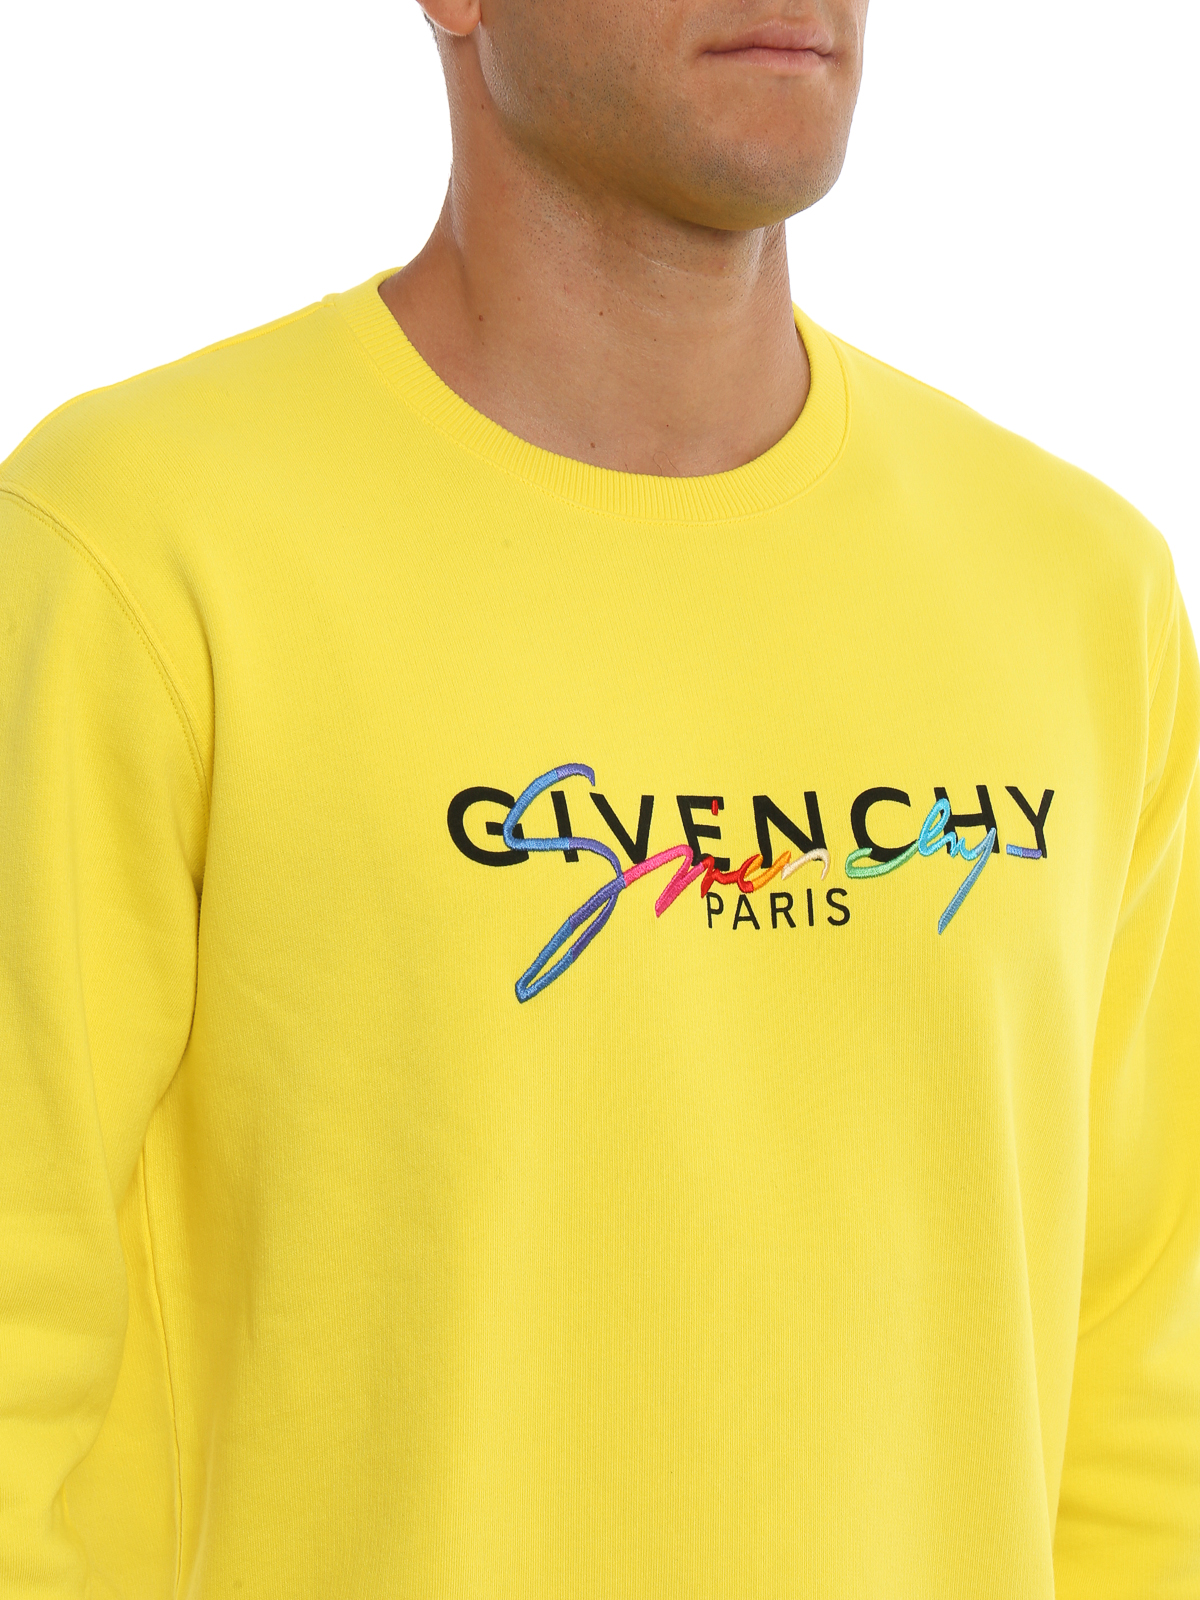 Givenchy paris rainbow embroidery sweatshirt 